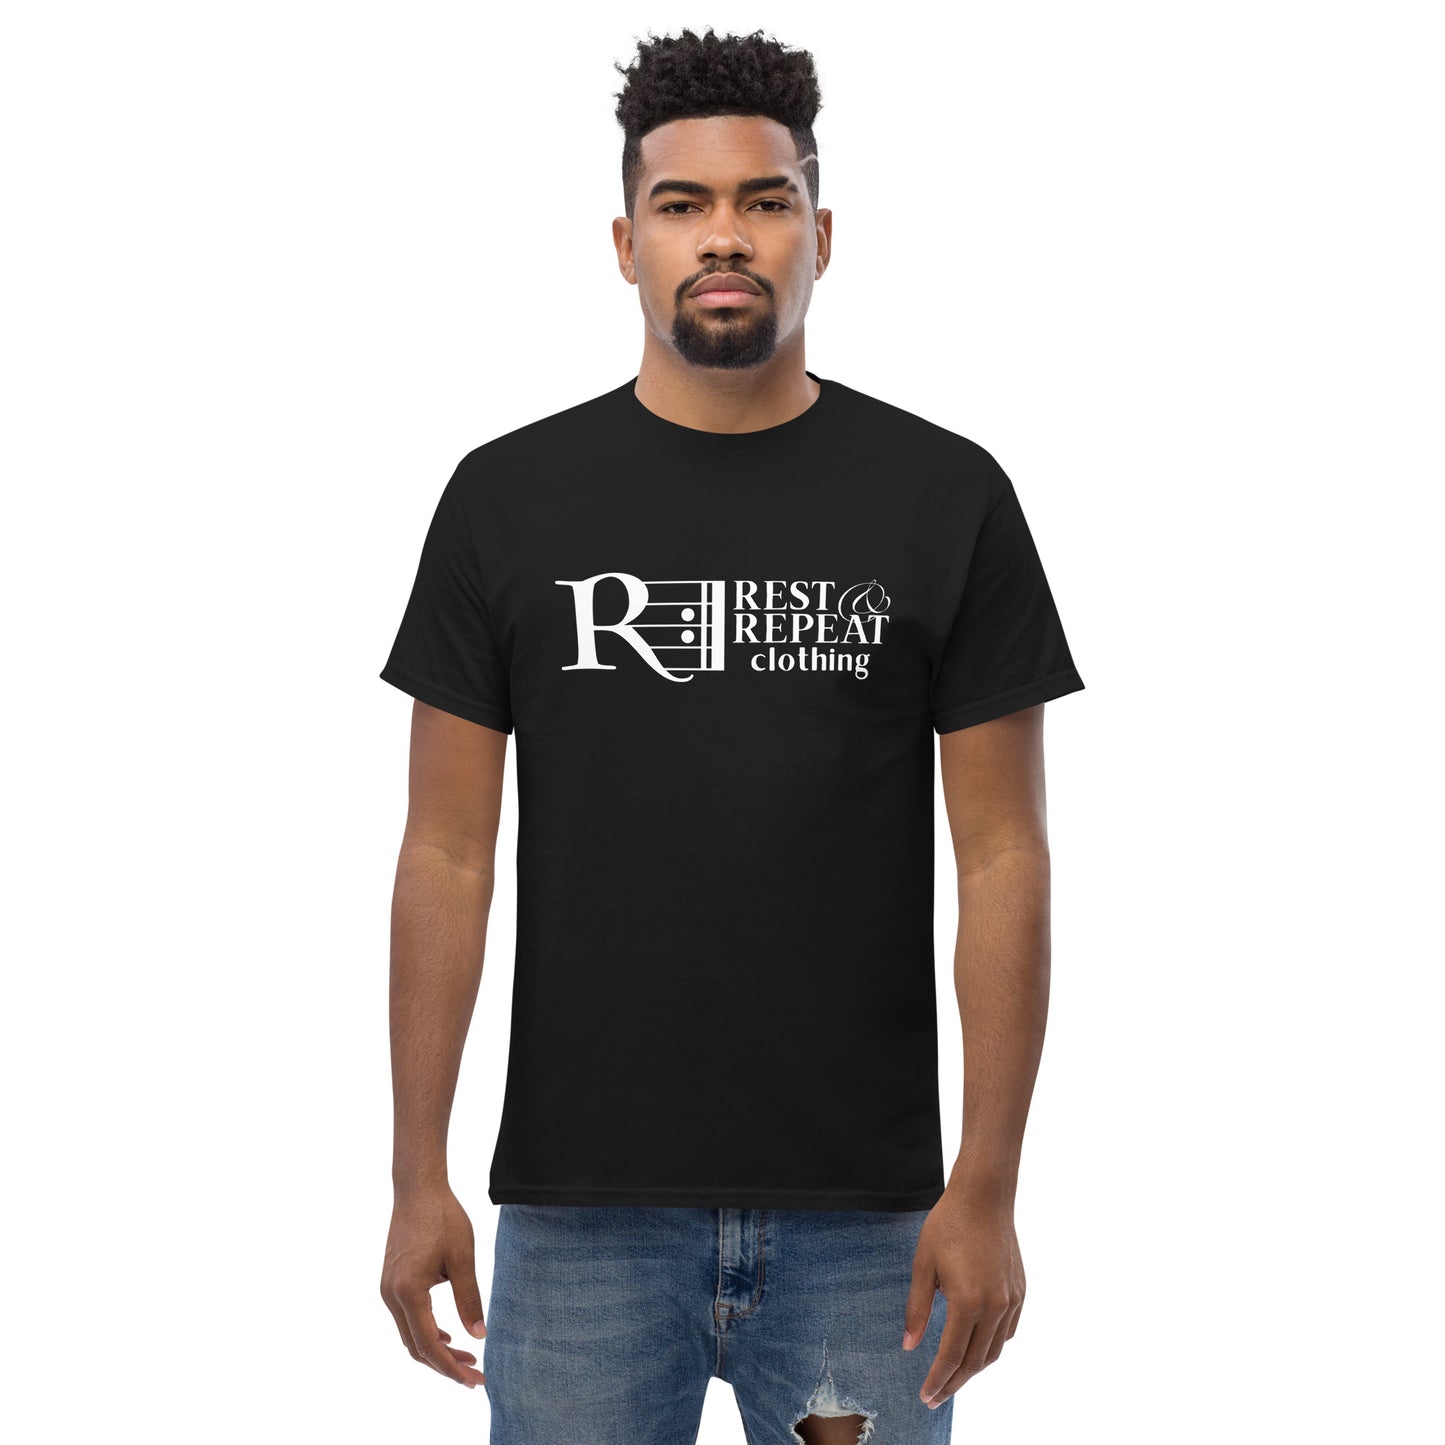 Rest Repeat Clothing Logo - Men's T-Shirt